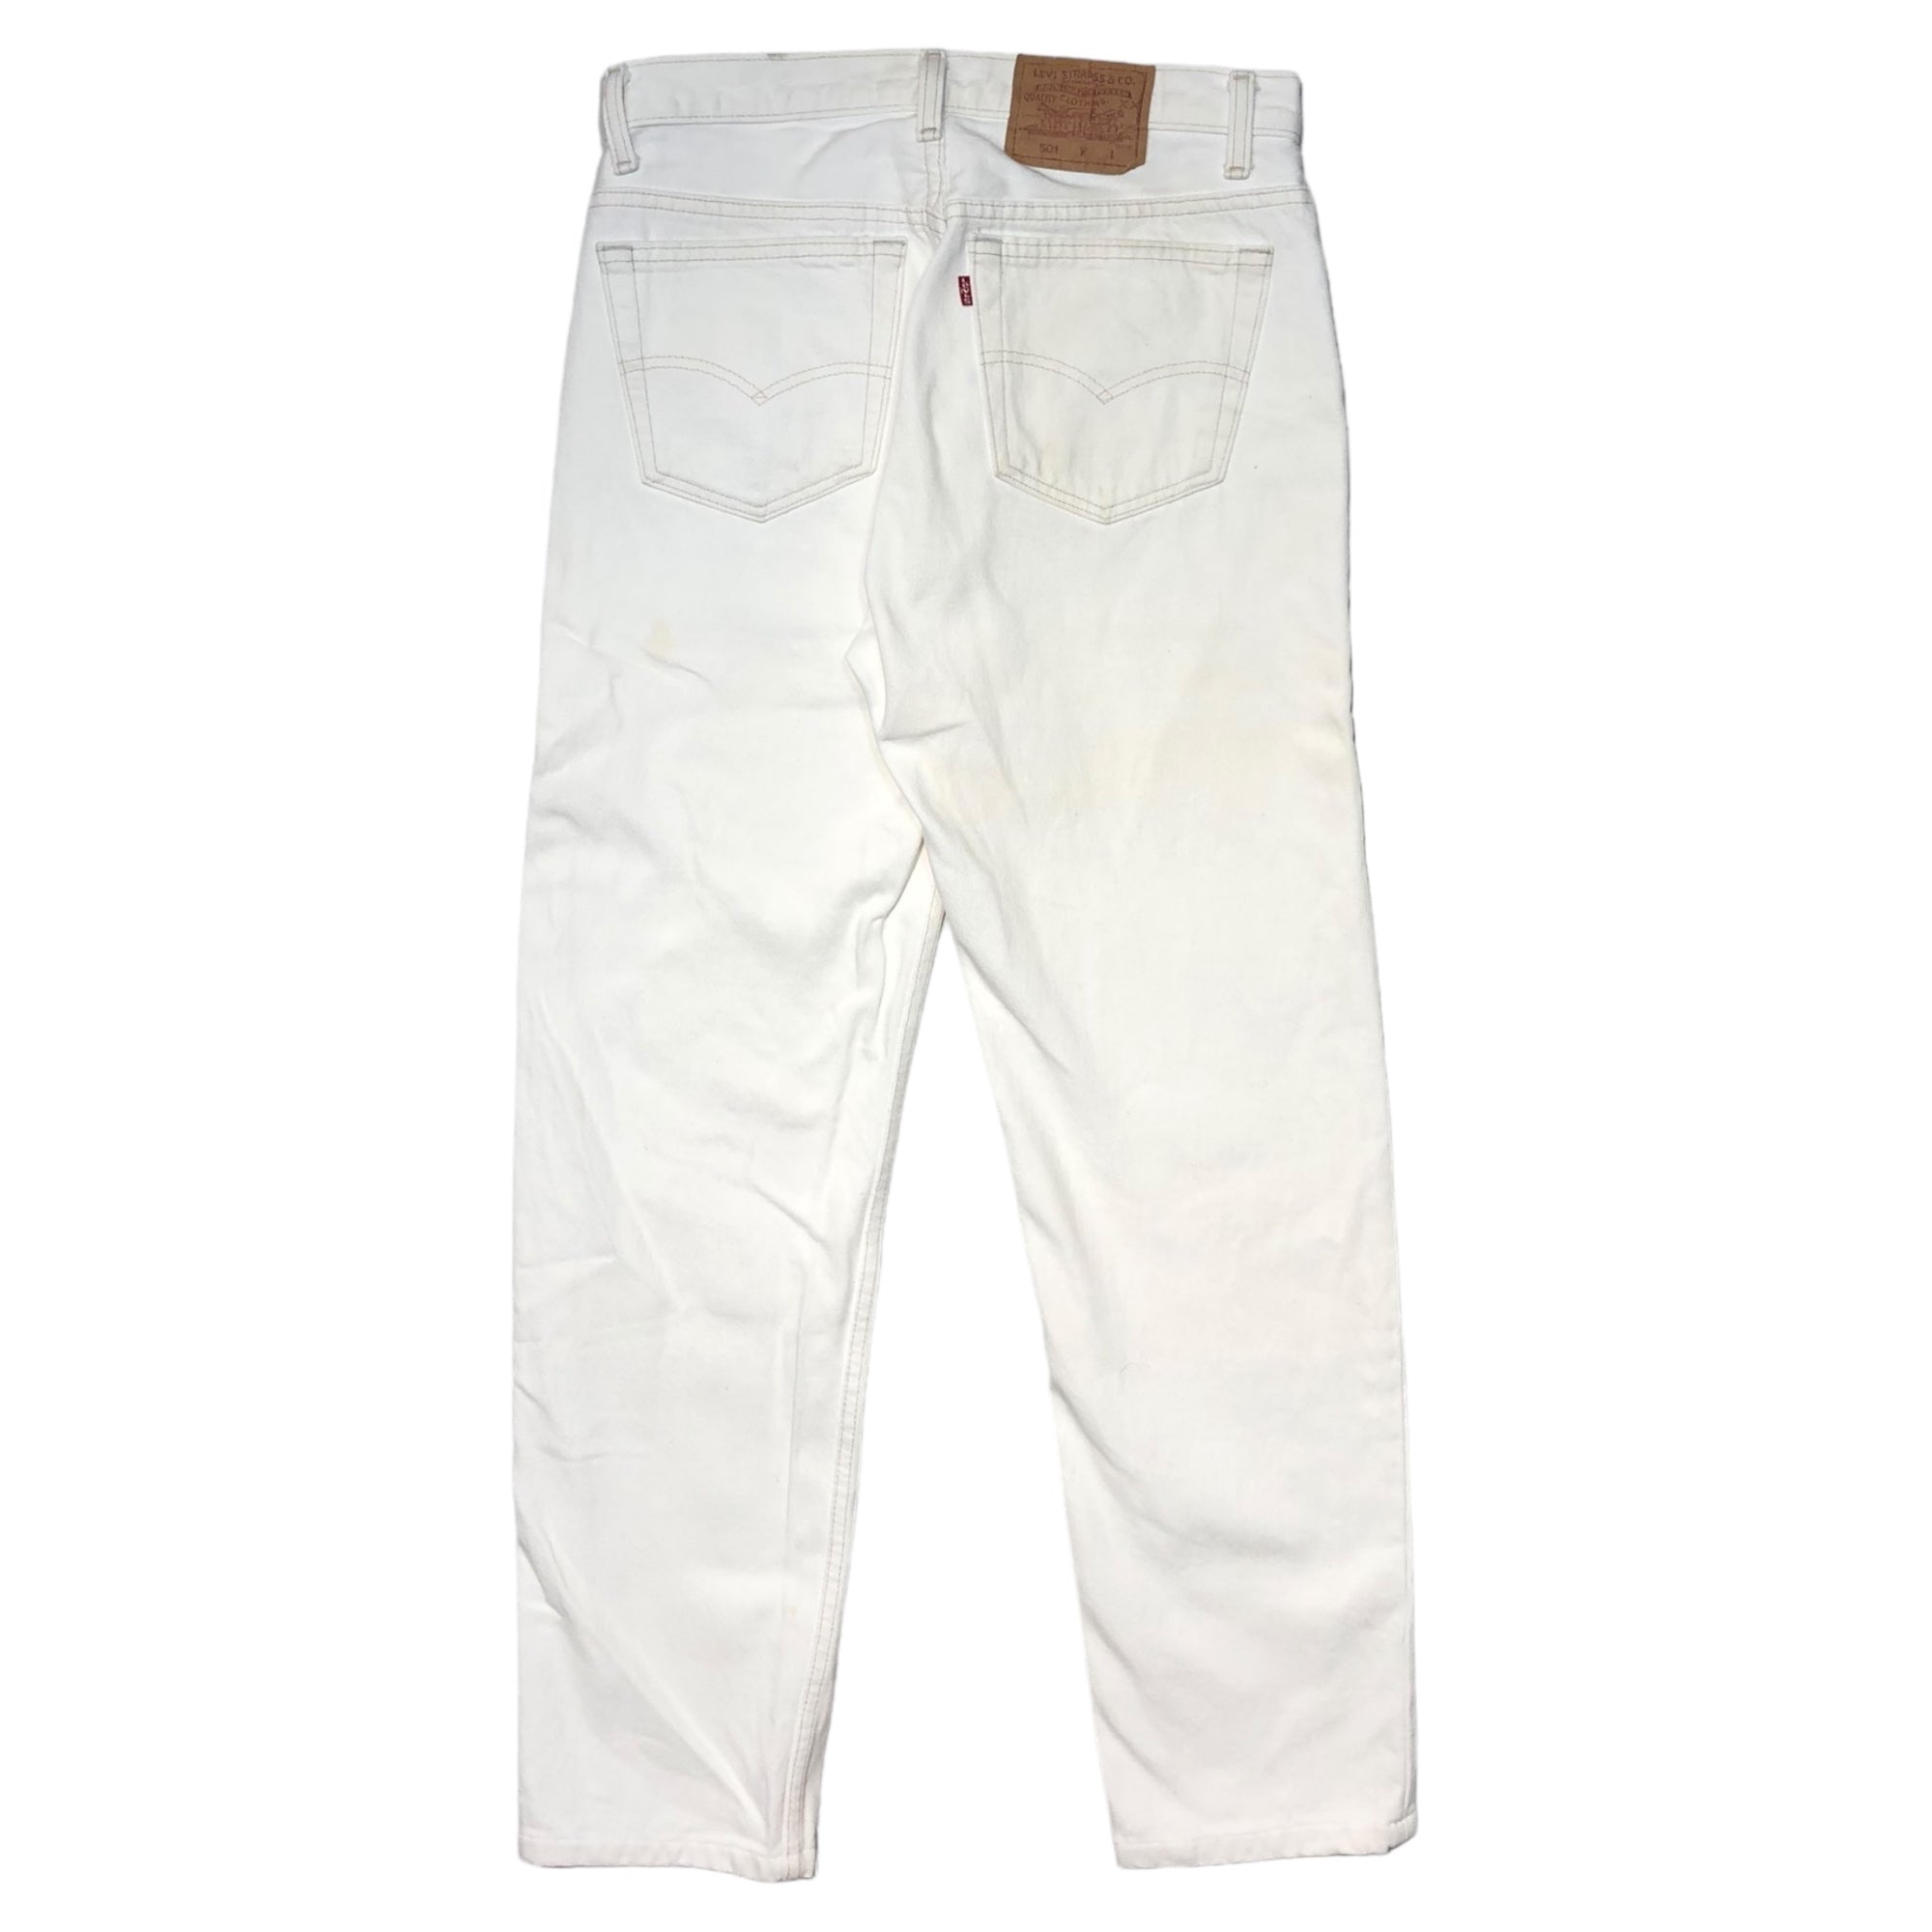 Levi's(リーバイス) 90's 501 white straight denim pants ホワイト ストレート デニム パンツ 501-0651 32/34 ホワイト 裏ボタン216 90年代 カナダ製